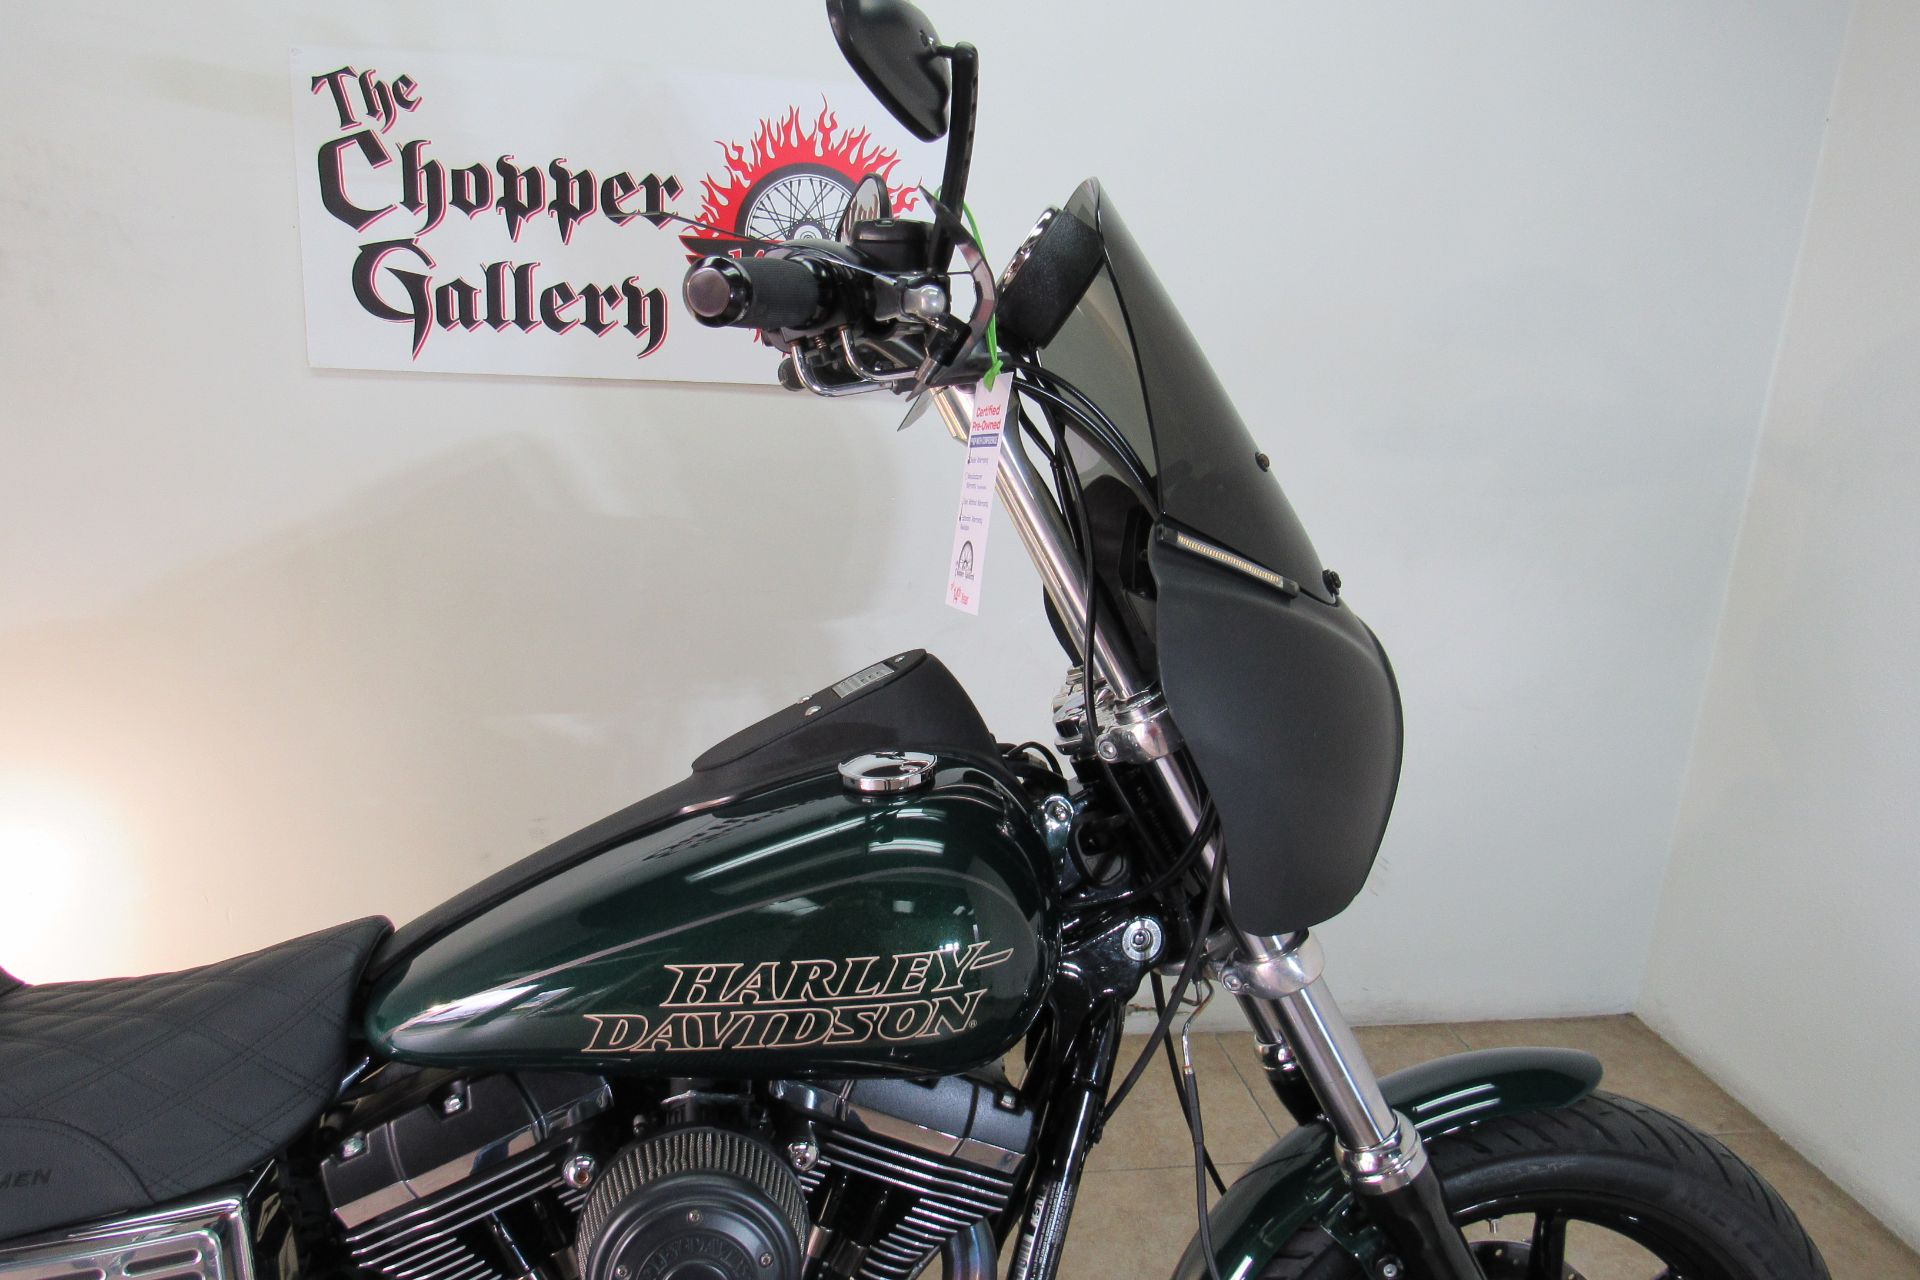 2015 Harley-Davidson Low Rider® in Temecula, California - Photo 16